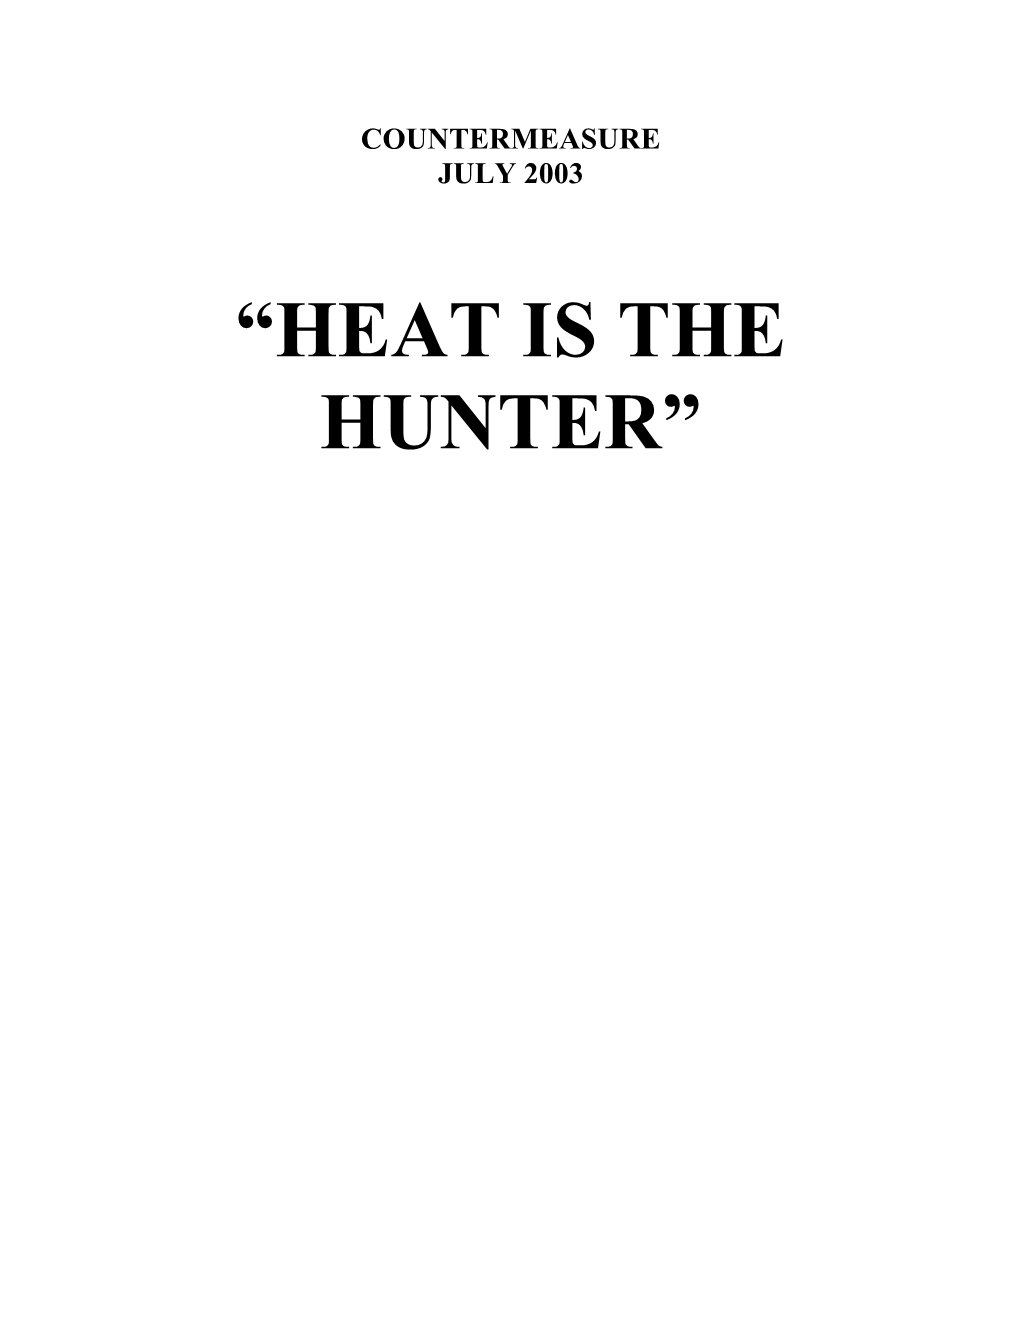 Heat Is the Hunter